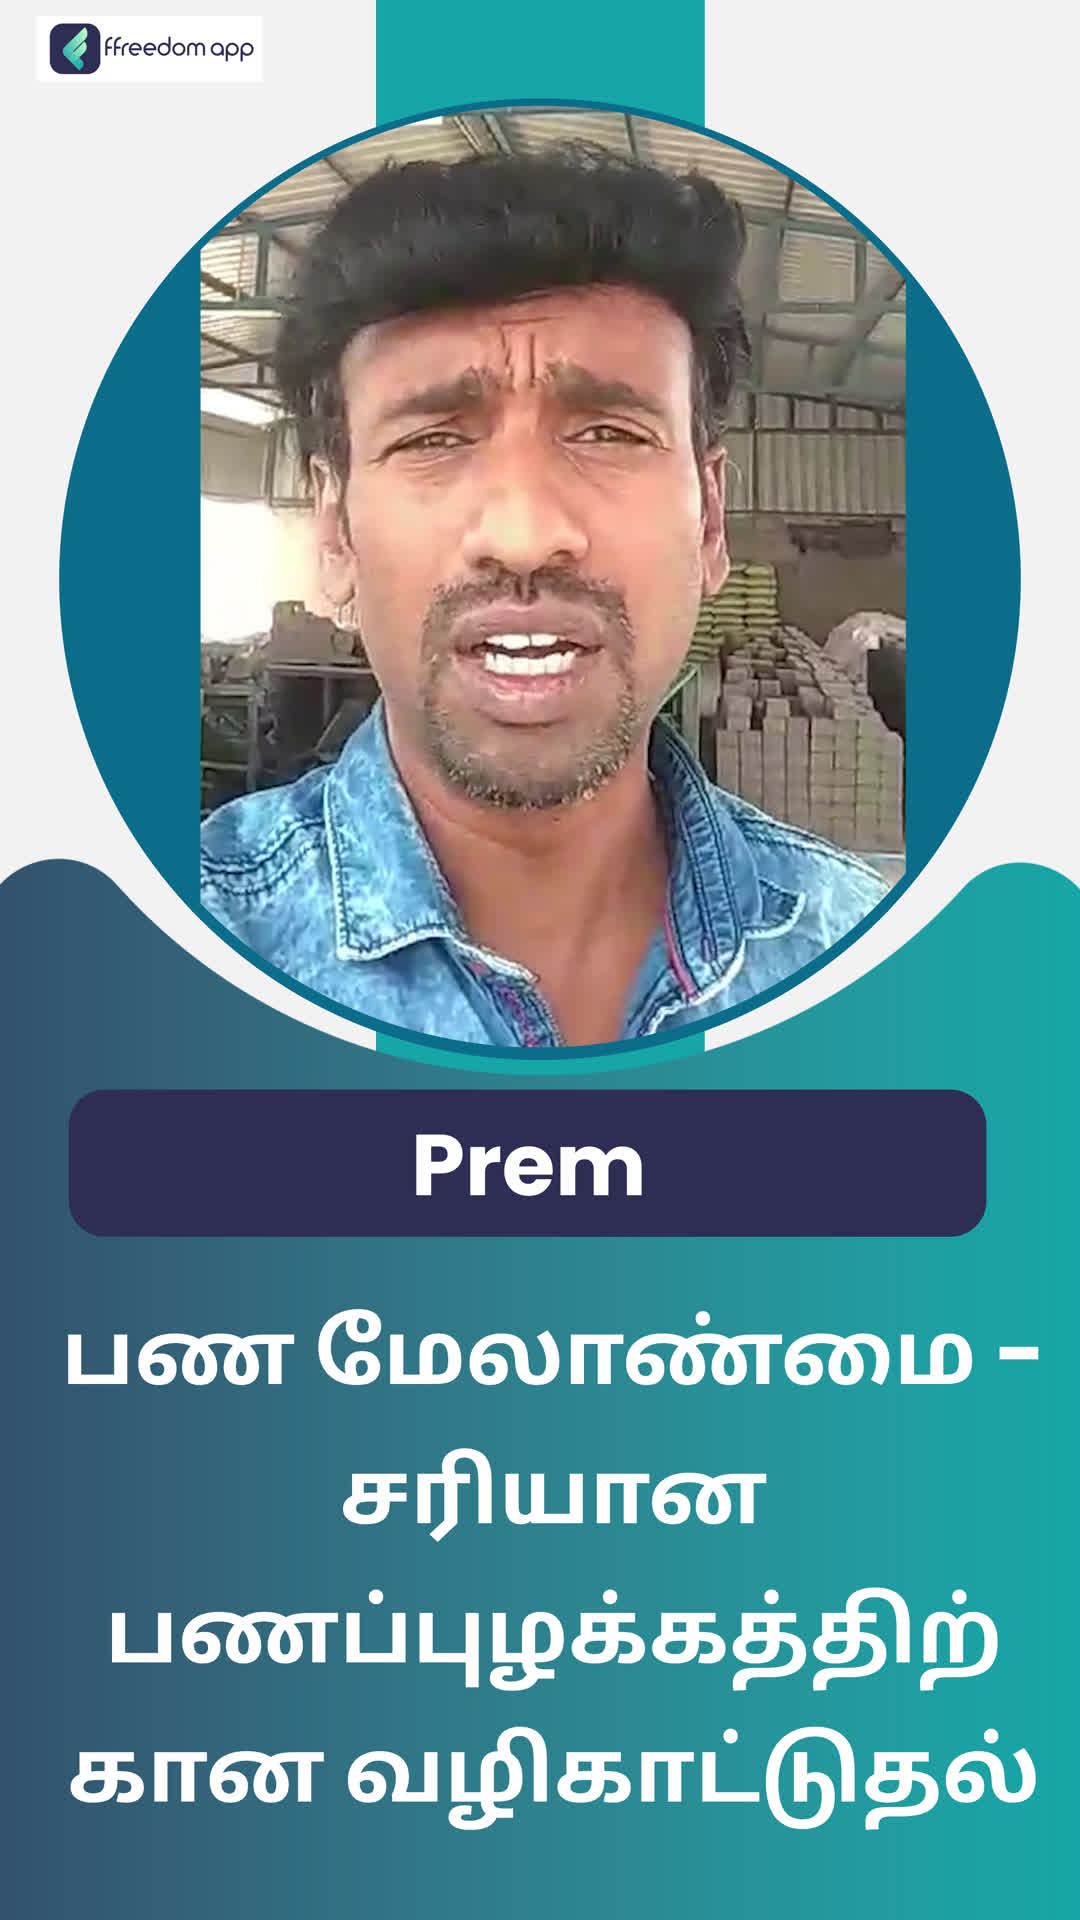 Prem's Honest Review of ffreedom app  Tamil Nadu